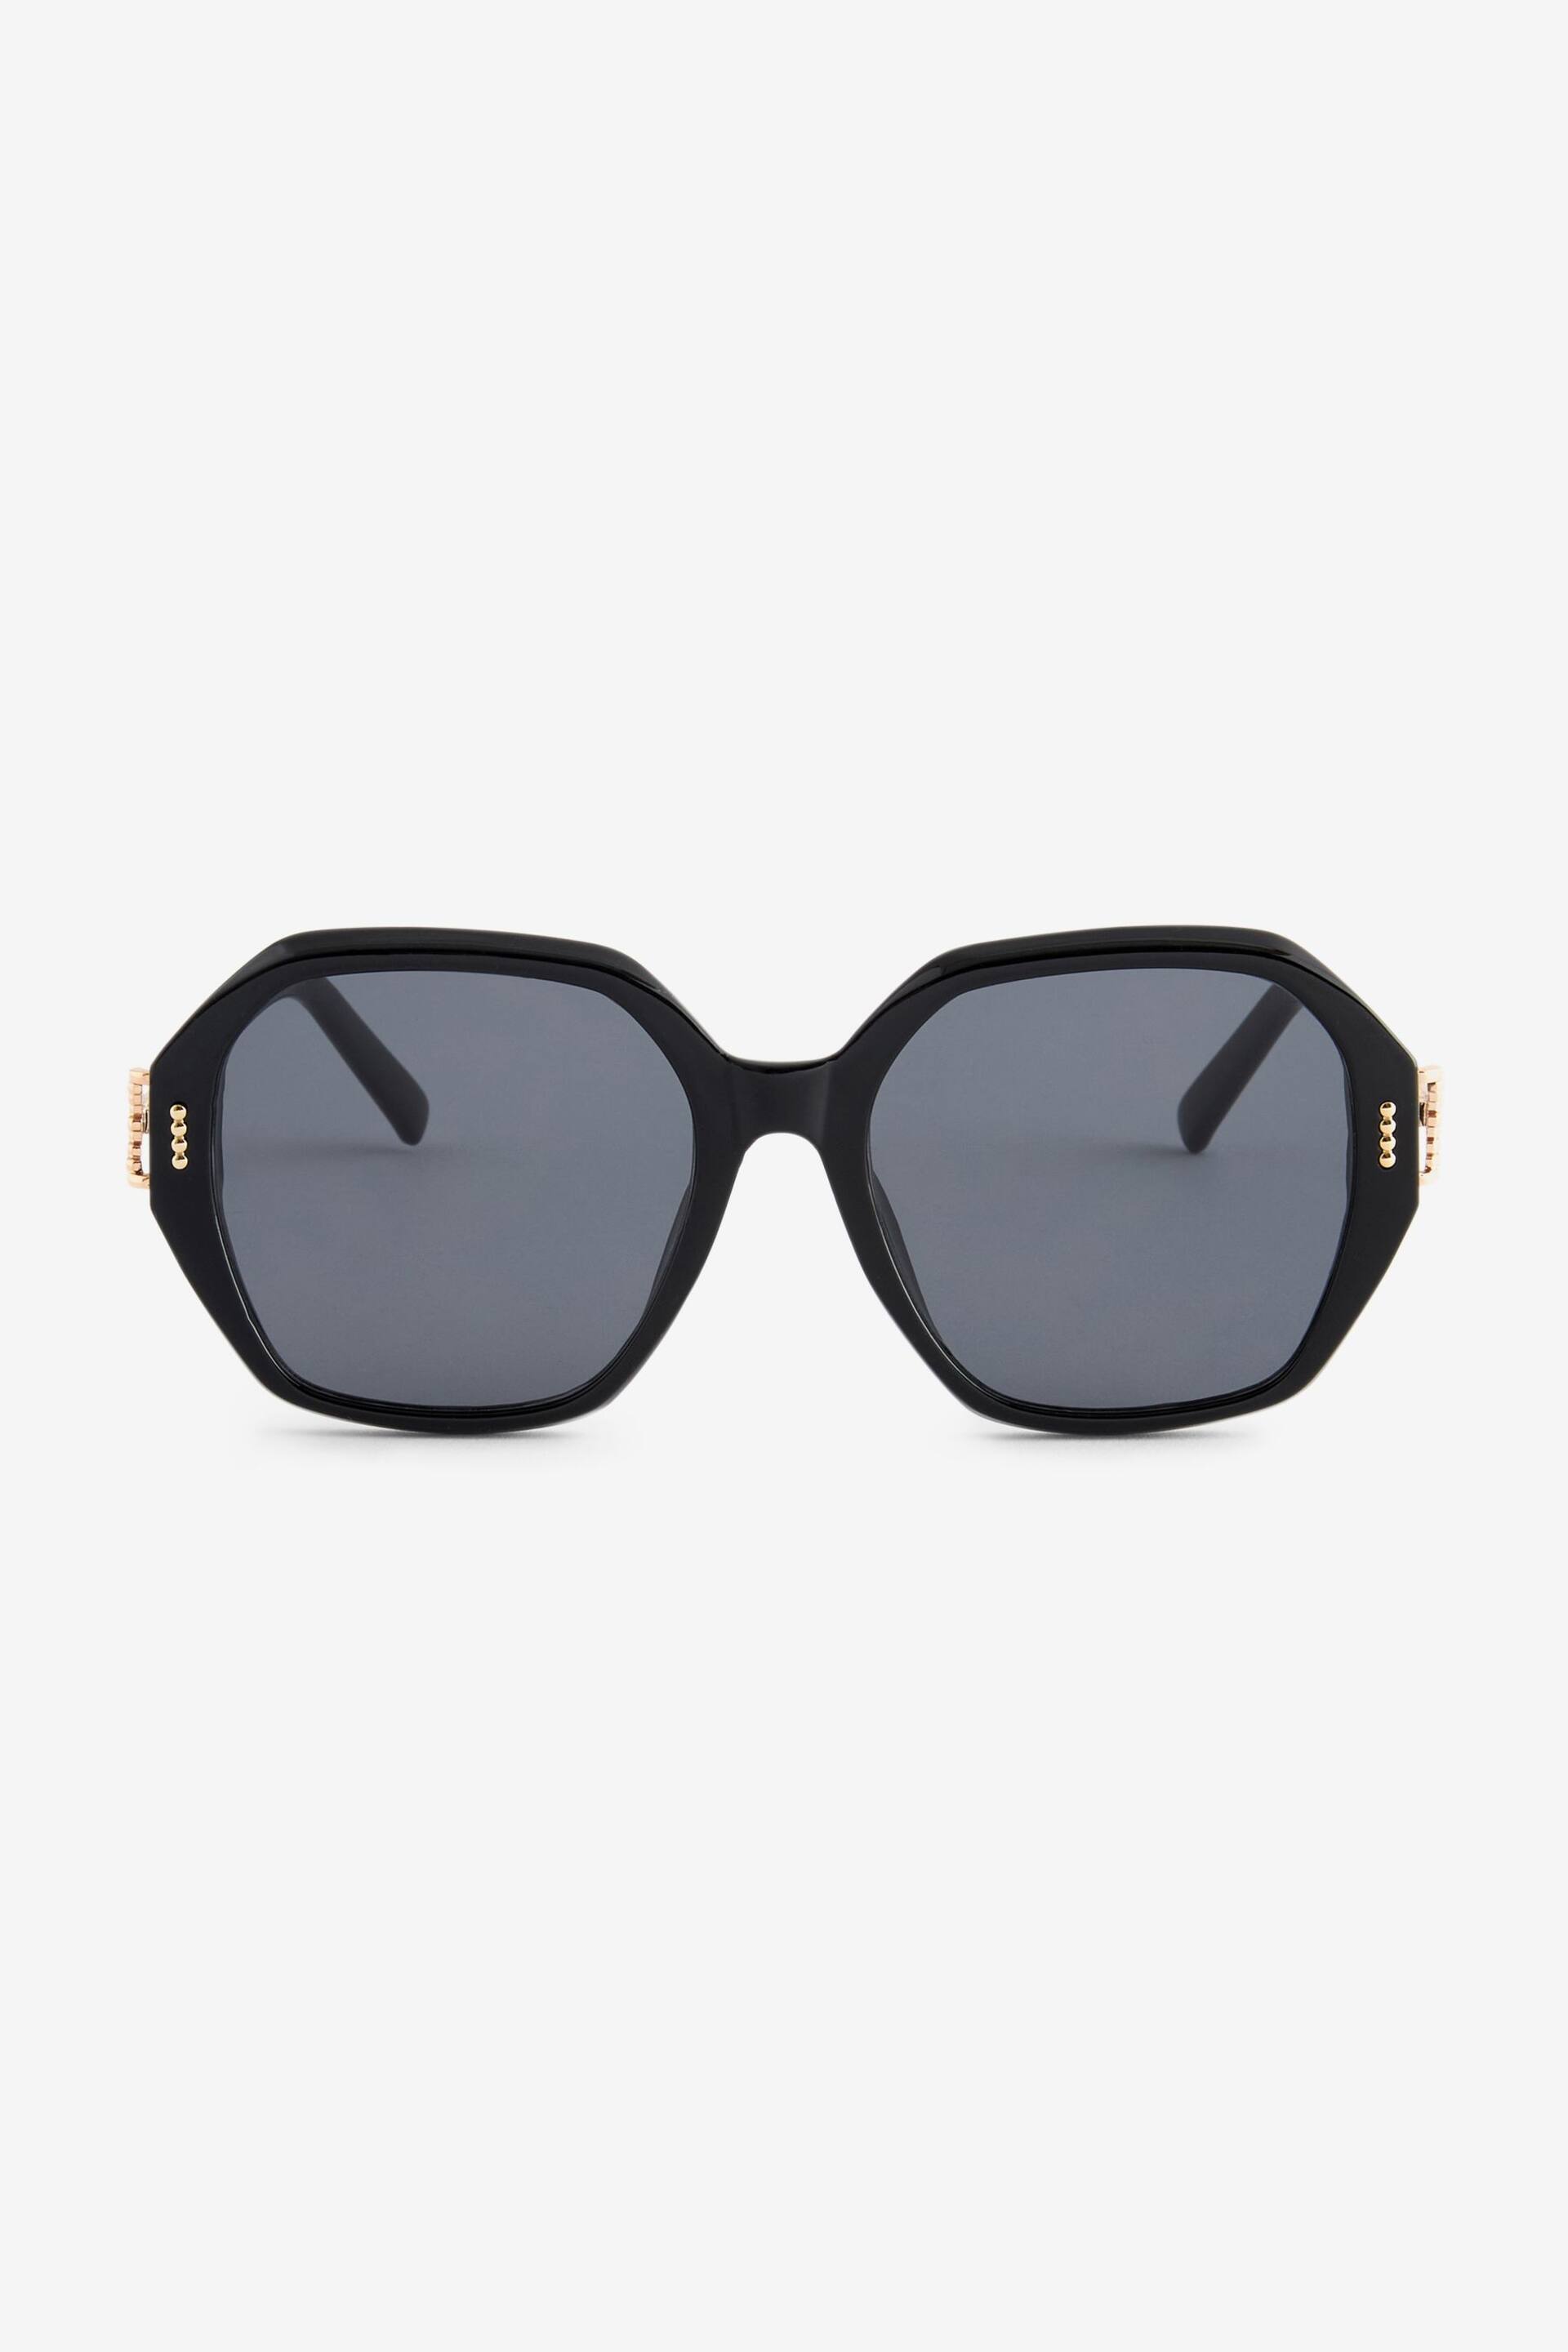 Black Large Hexagon Metal Arm Sunglasses - Image 5 of 6